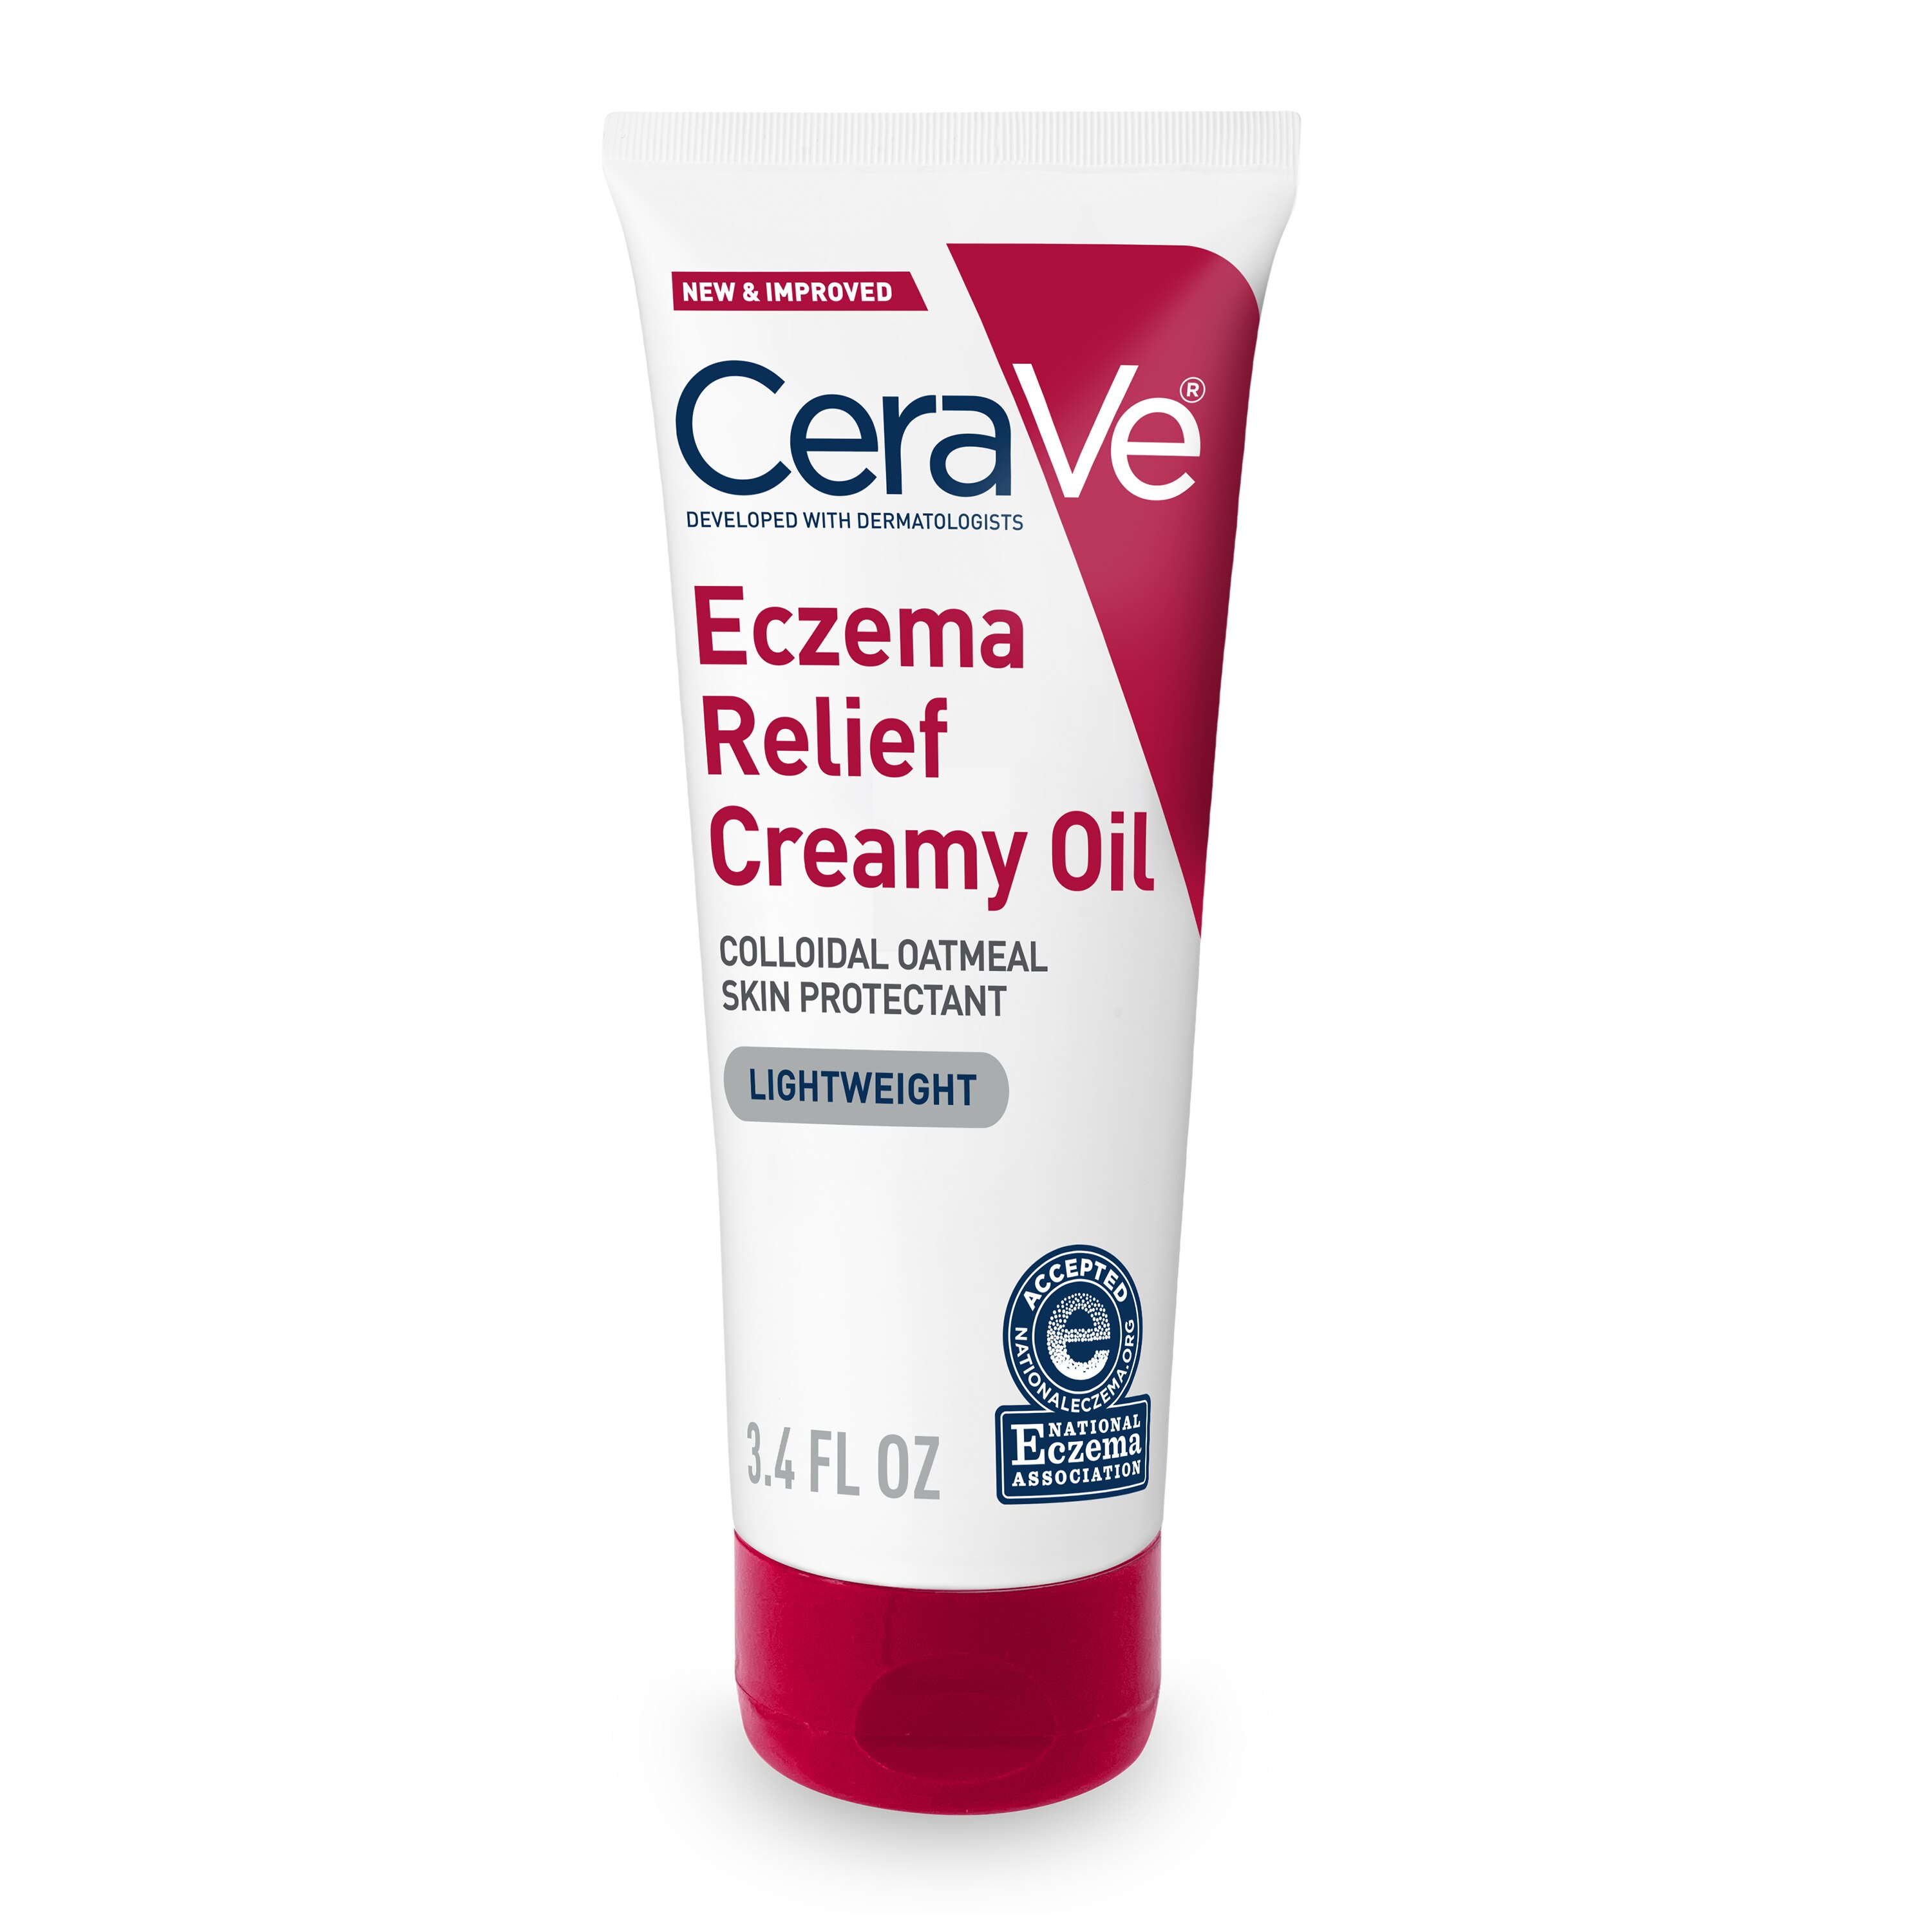 Cerave Eczema Relief Creamy Oil, Lightweight Body Moisturizing Lotion For Eczema Skin With Colloidal Oatmeal, 3.4 Oz , CVS